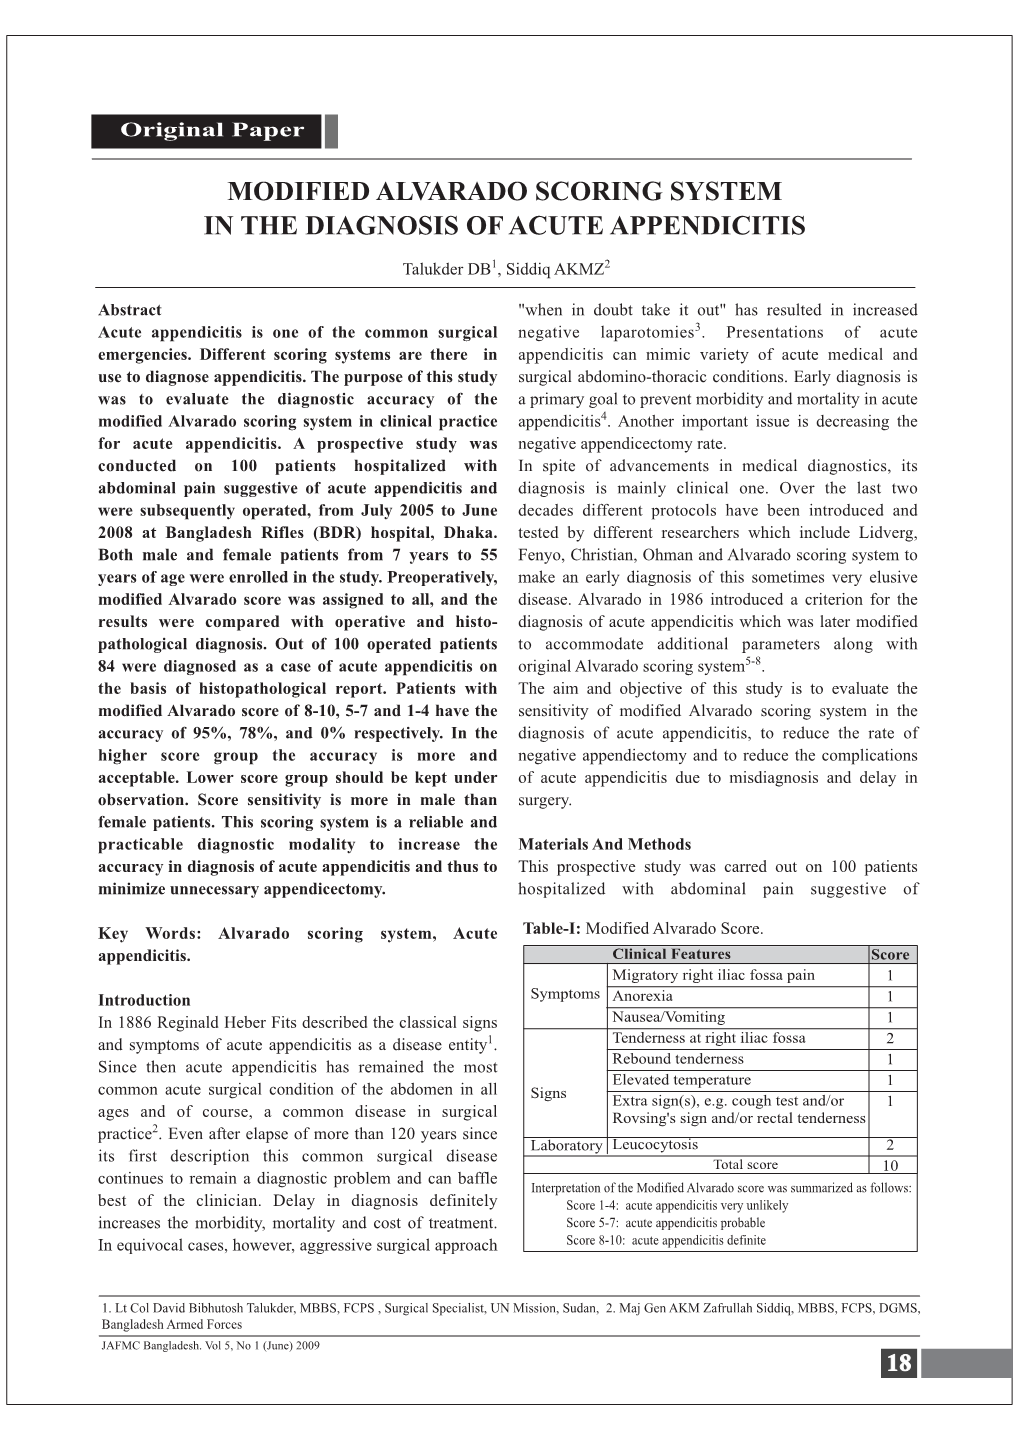 Modified Alvarado Scoring System in the Diagnosis of Acute Appendicitis